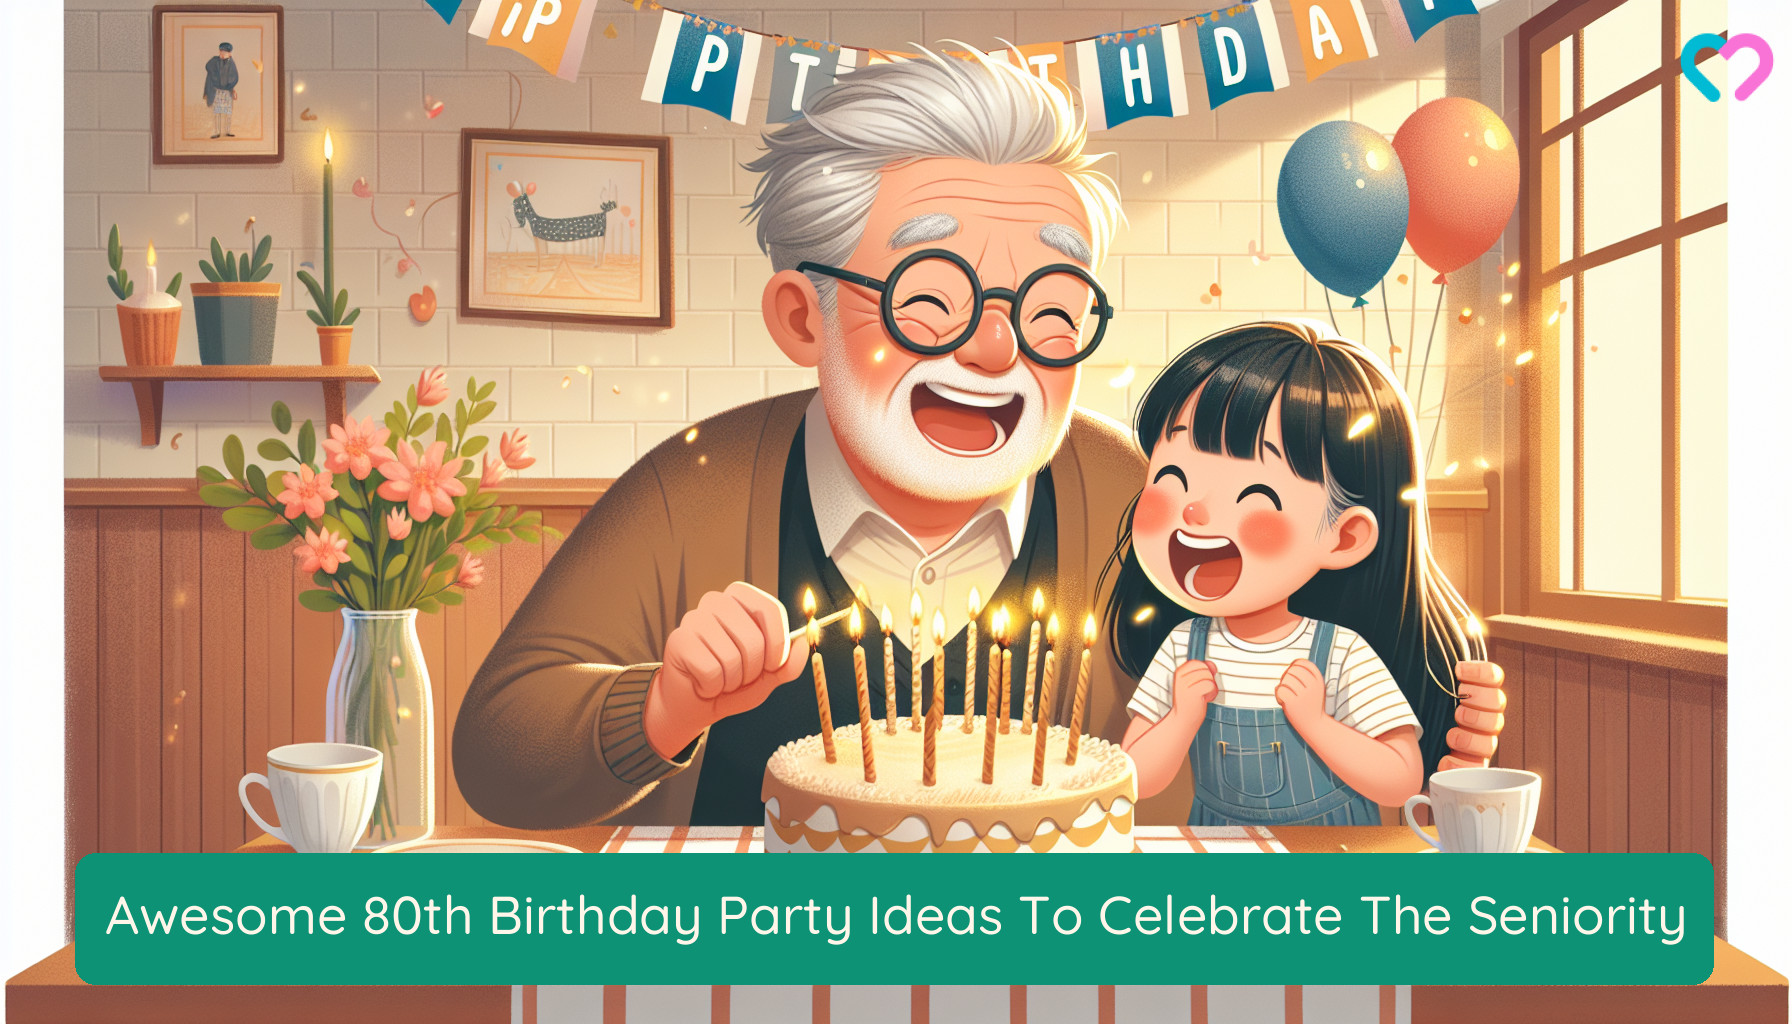 80th birthday party ideas_illustration